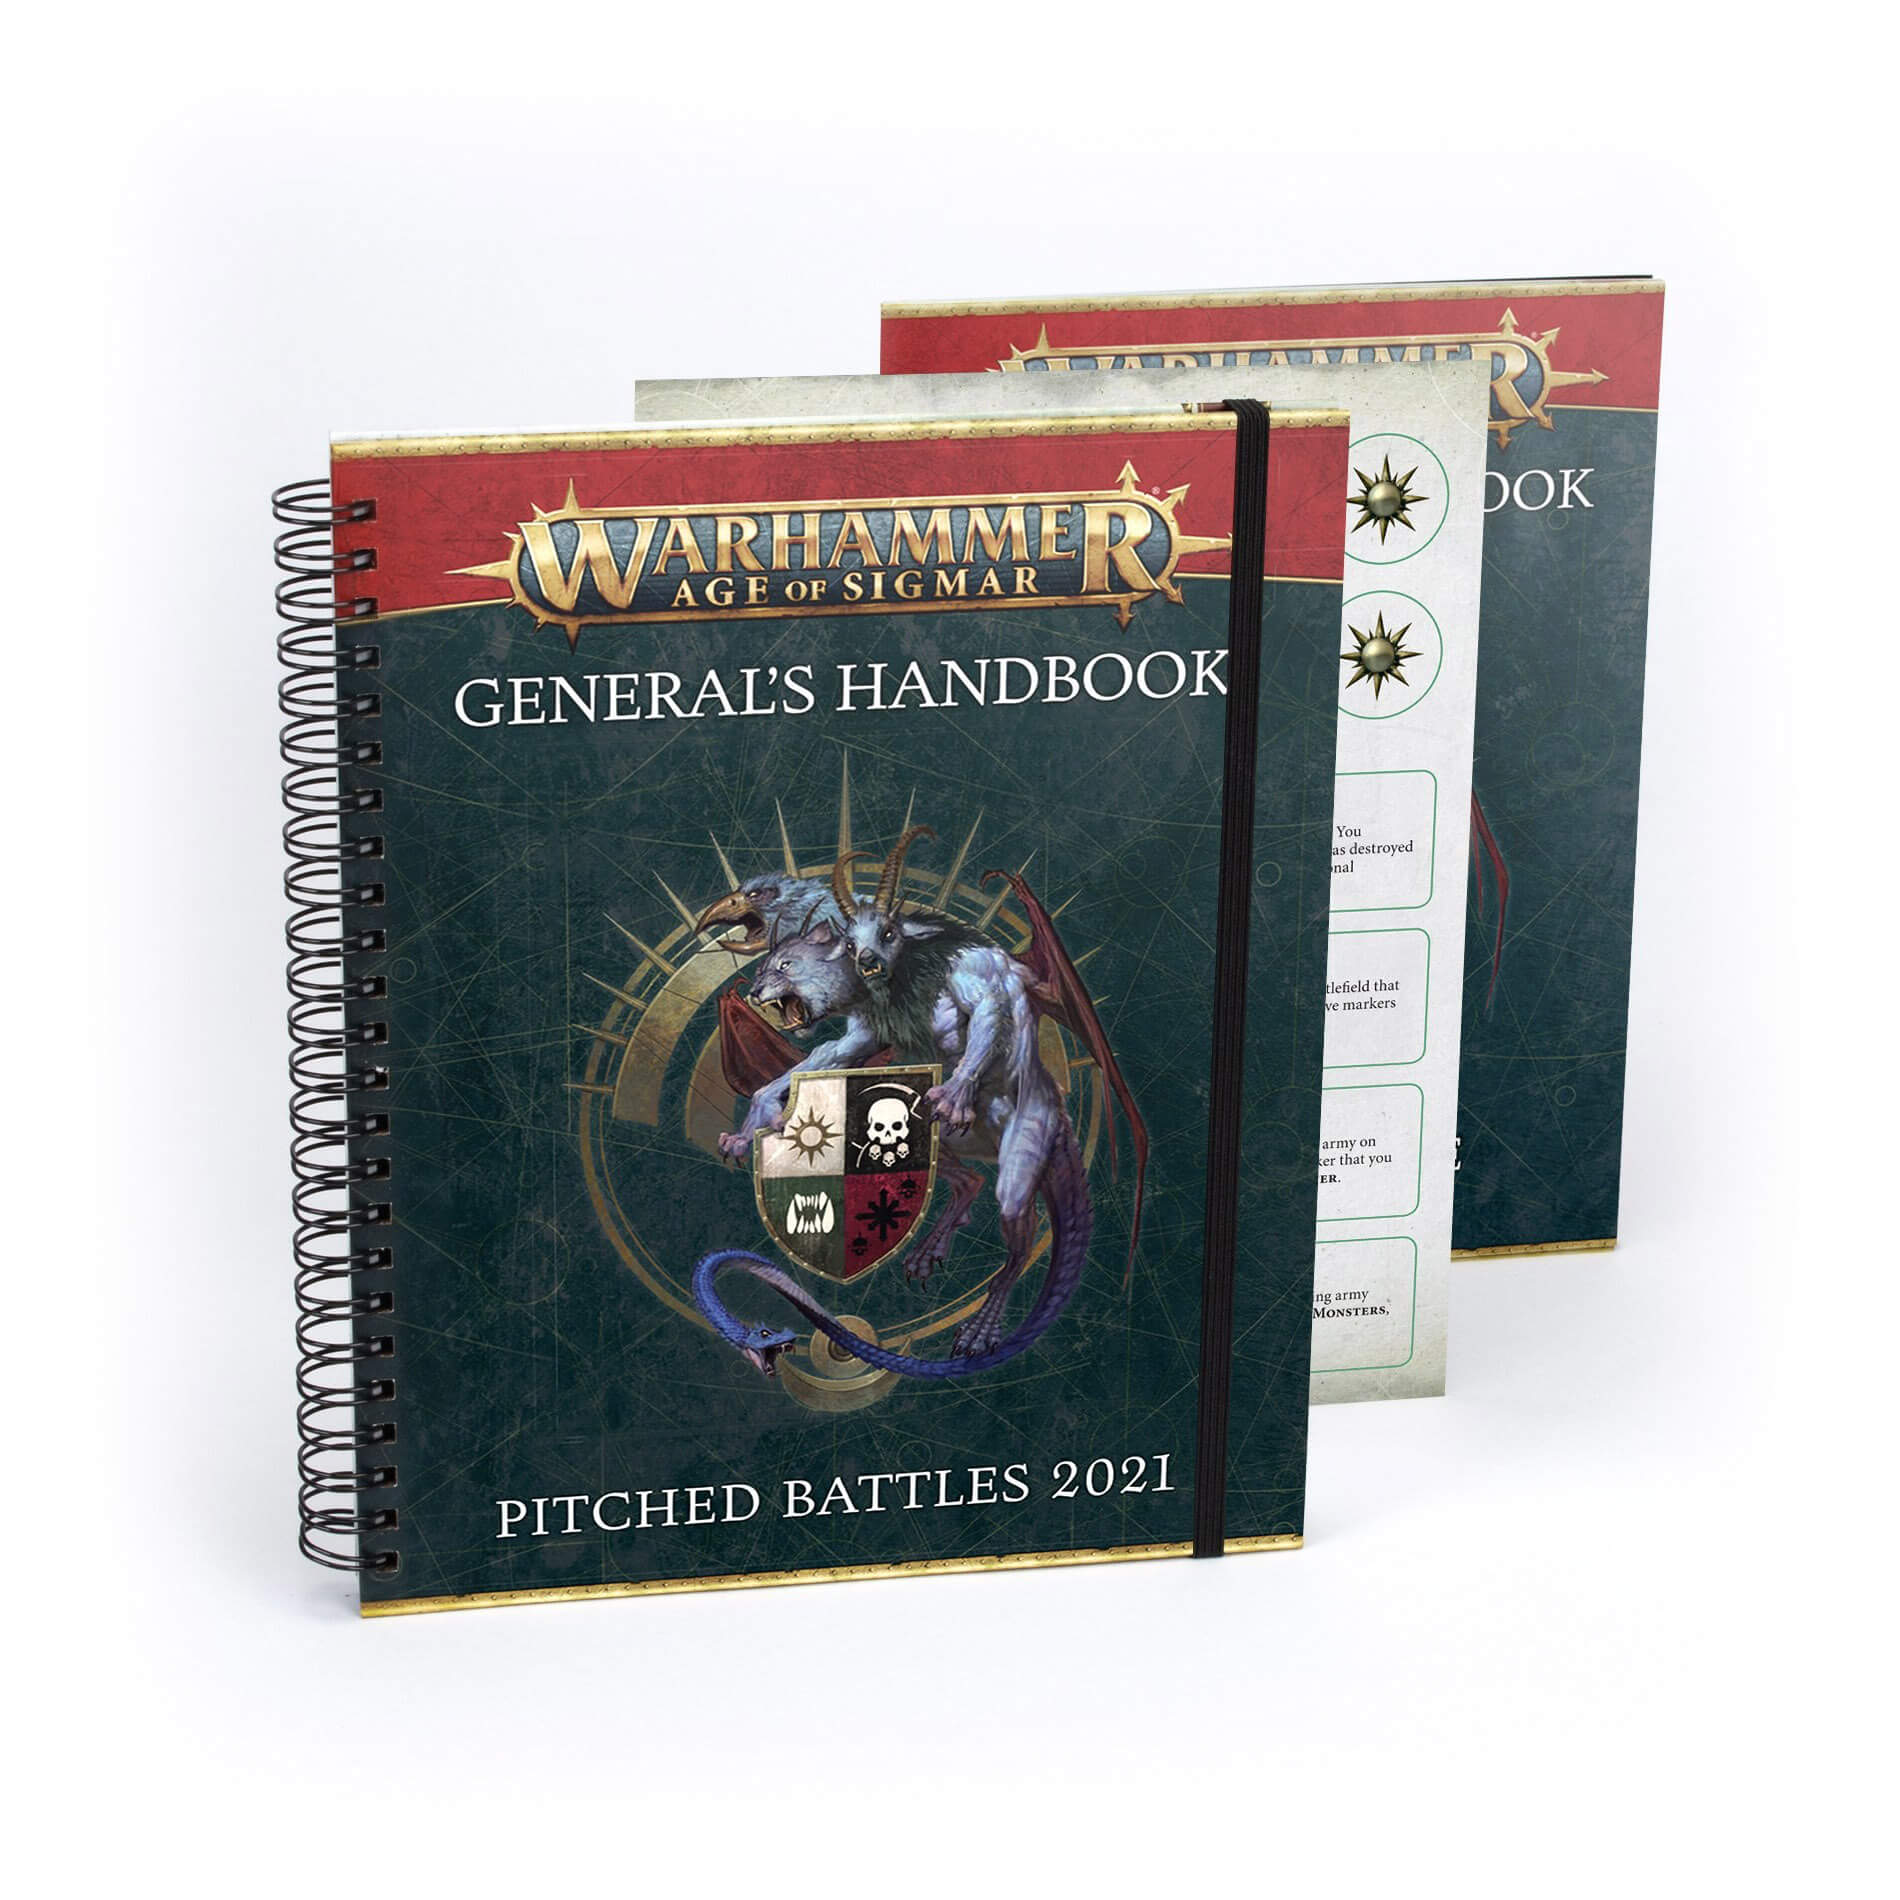 Warhammer Age of Sigmar General's Handbook Pitched Battles 2021